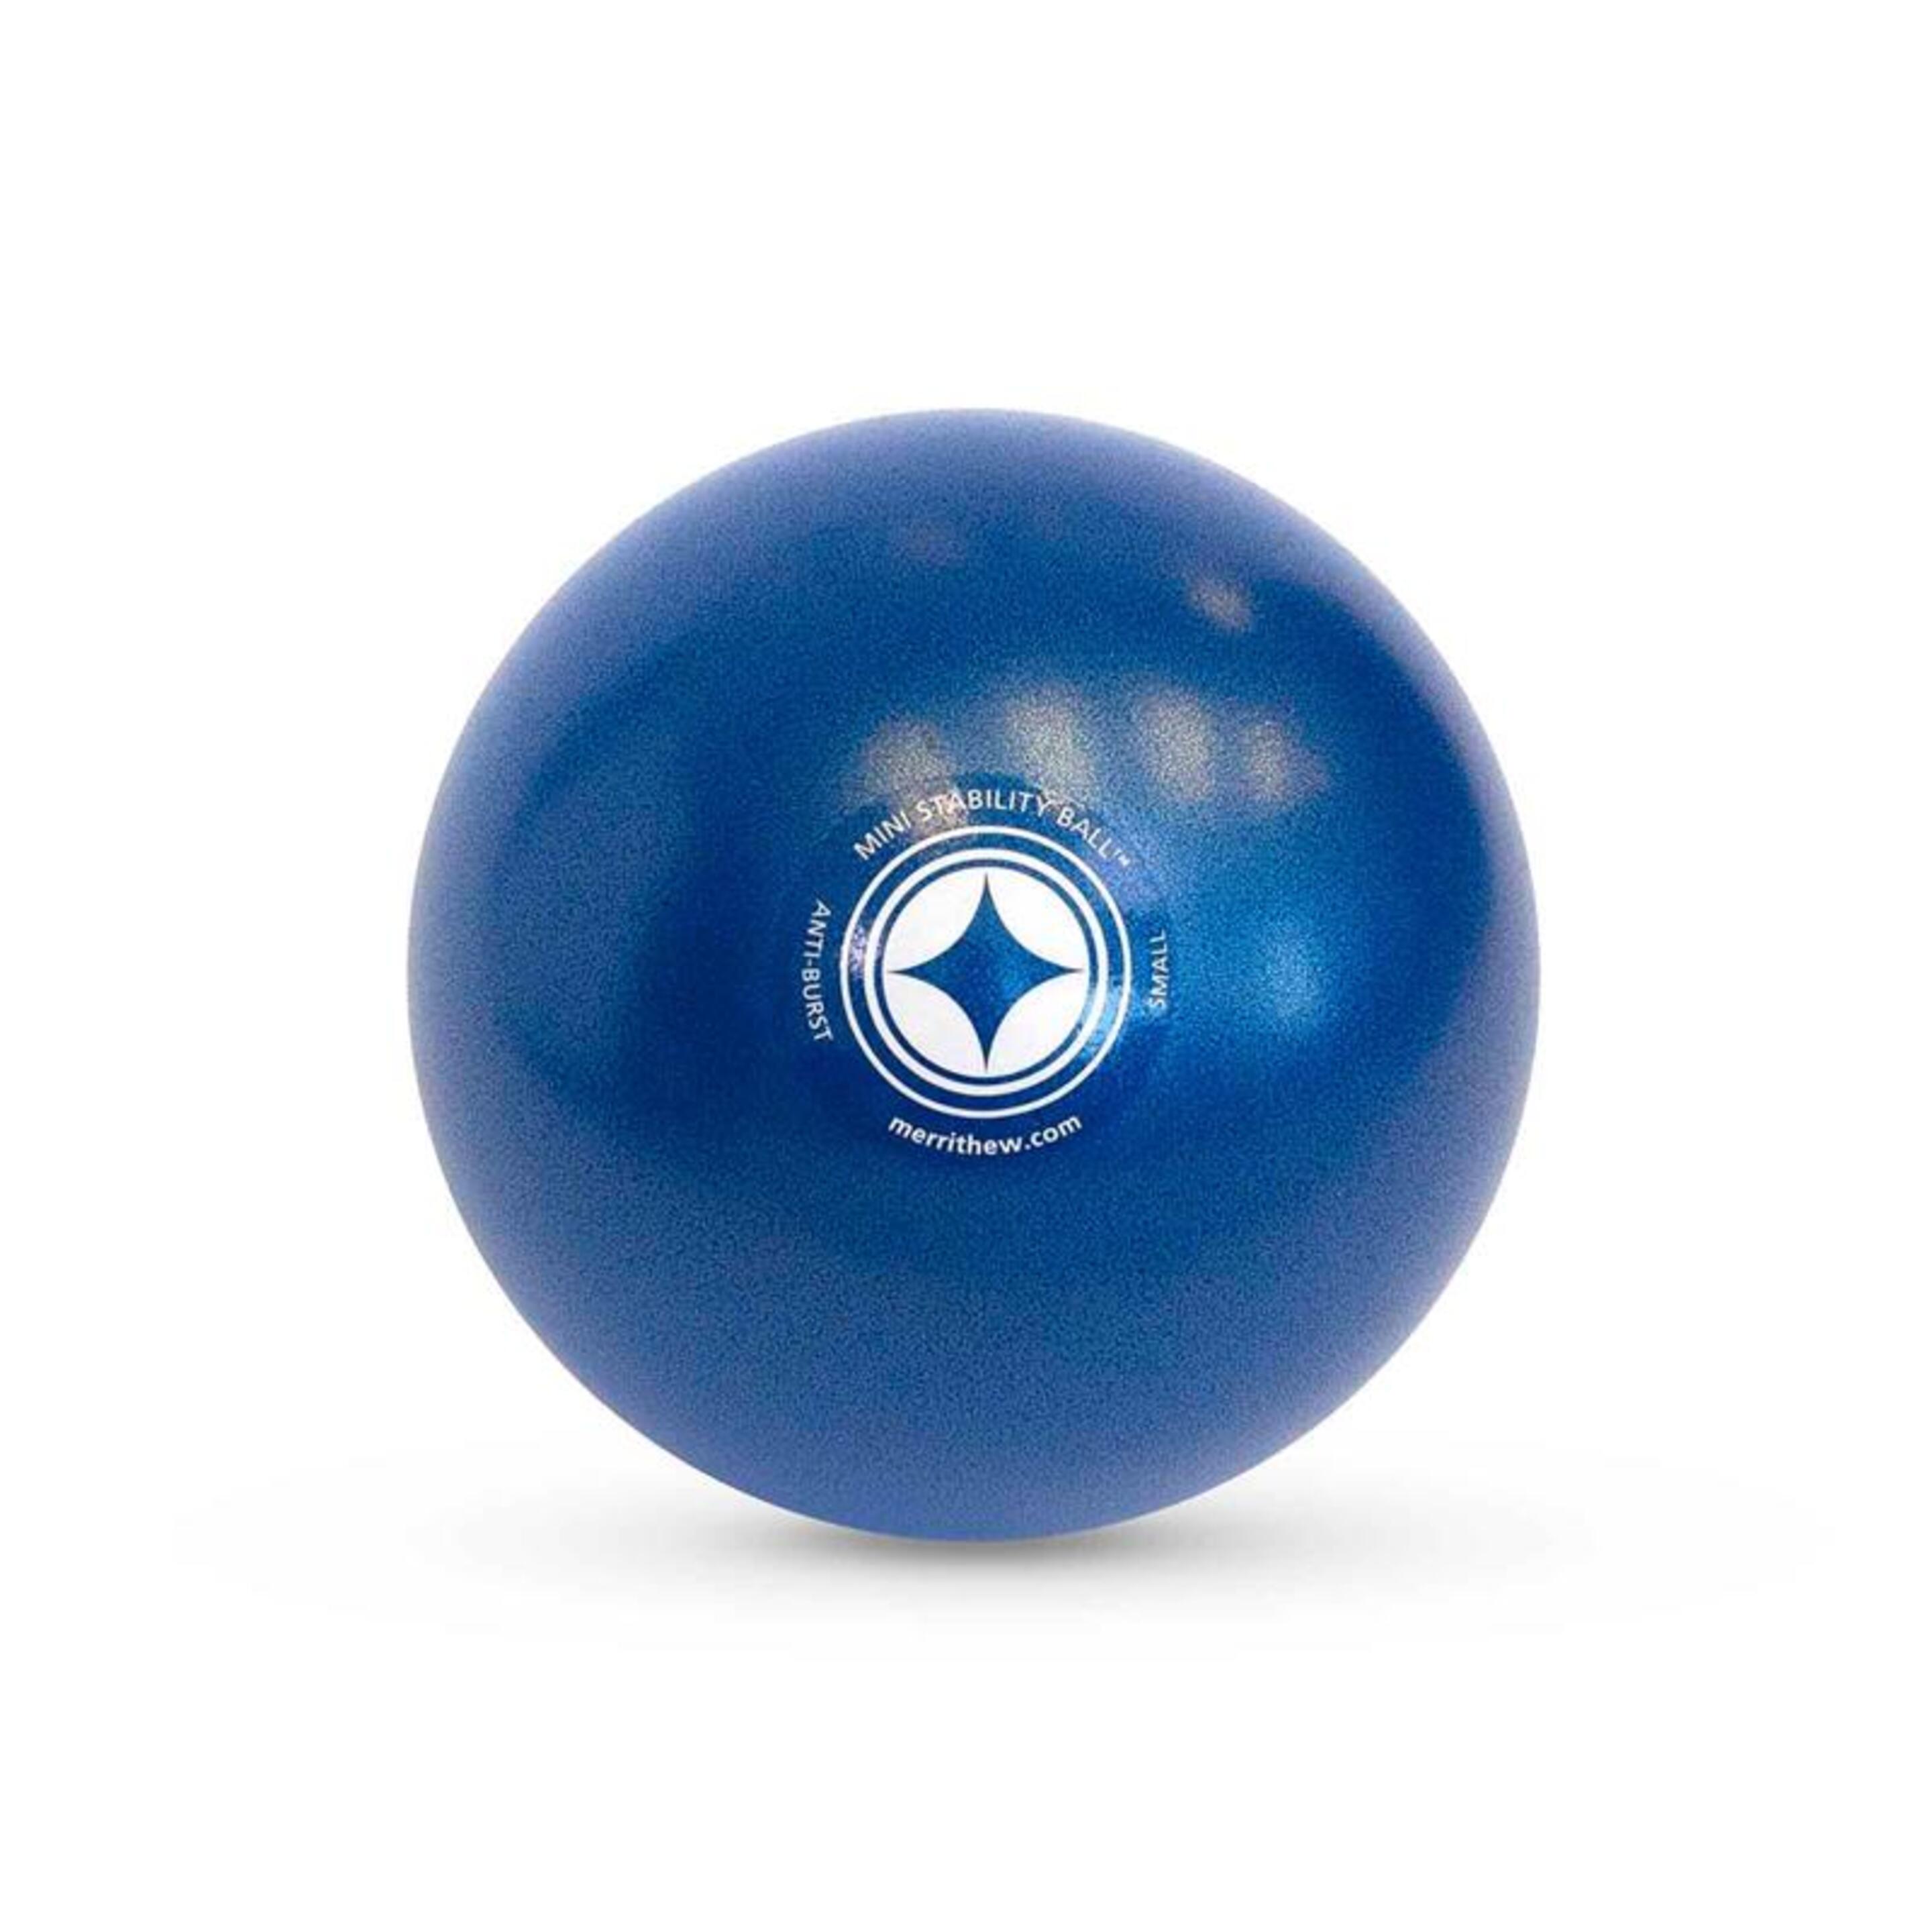 Mini Stability Ball 19 Cm Azul